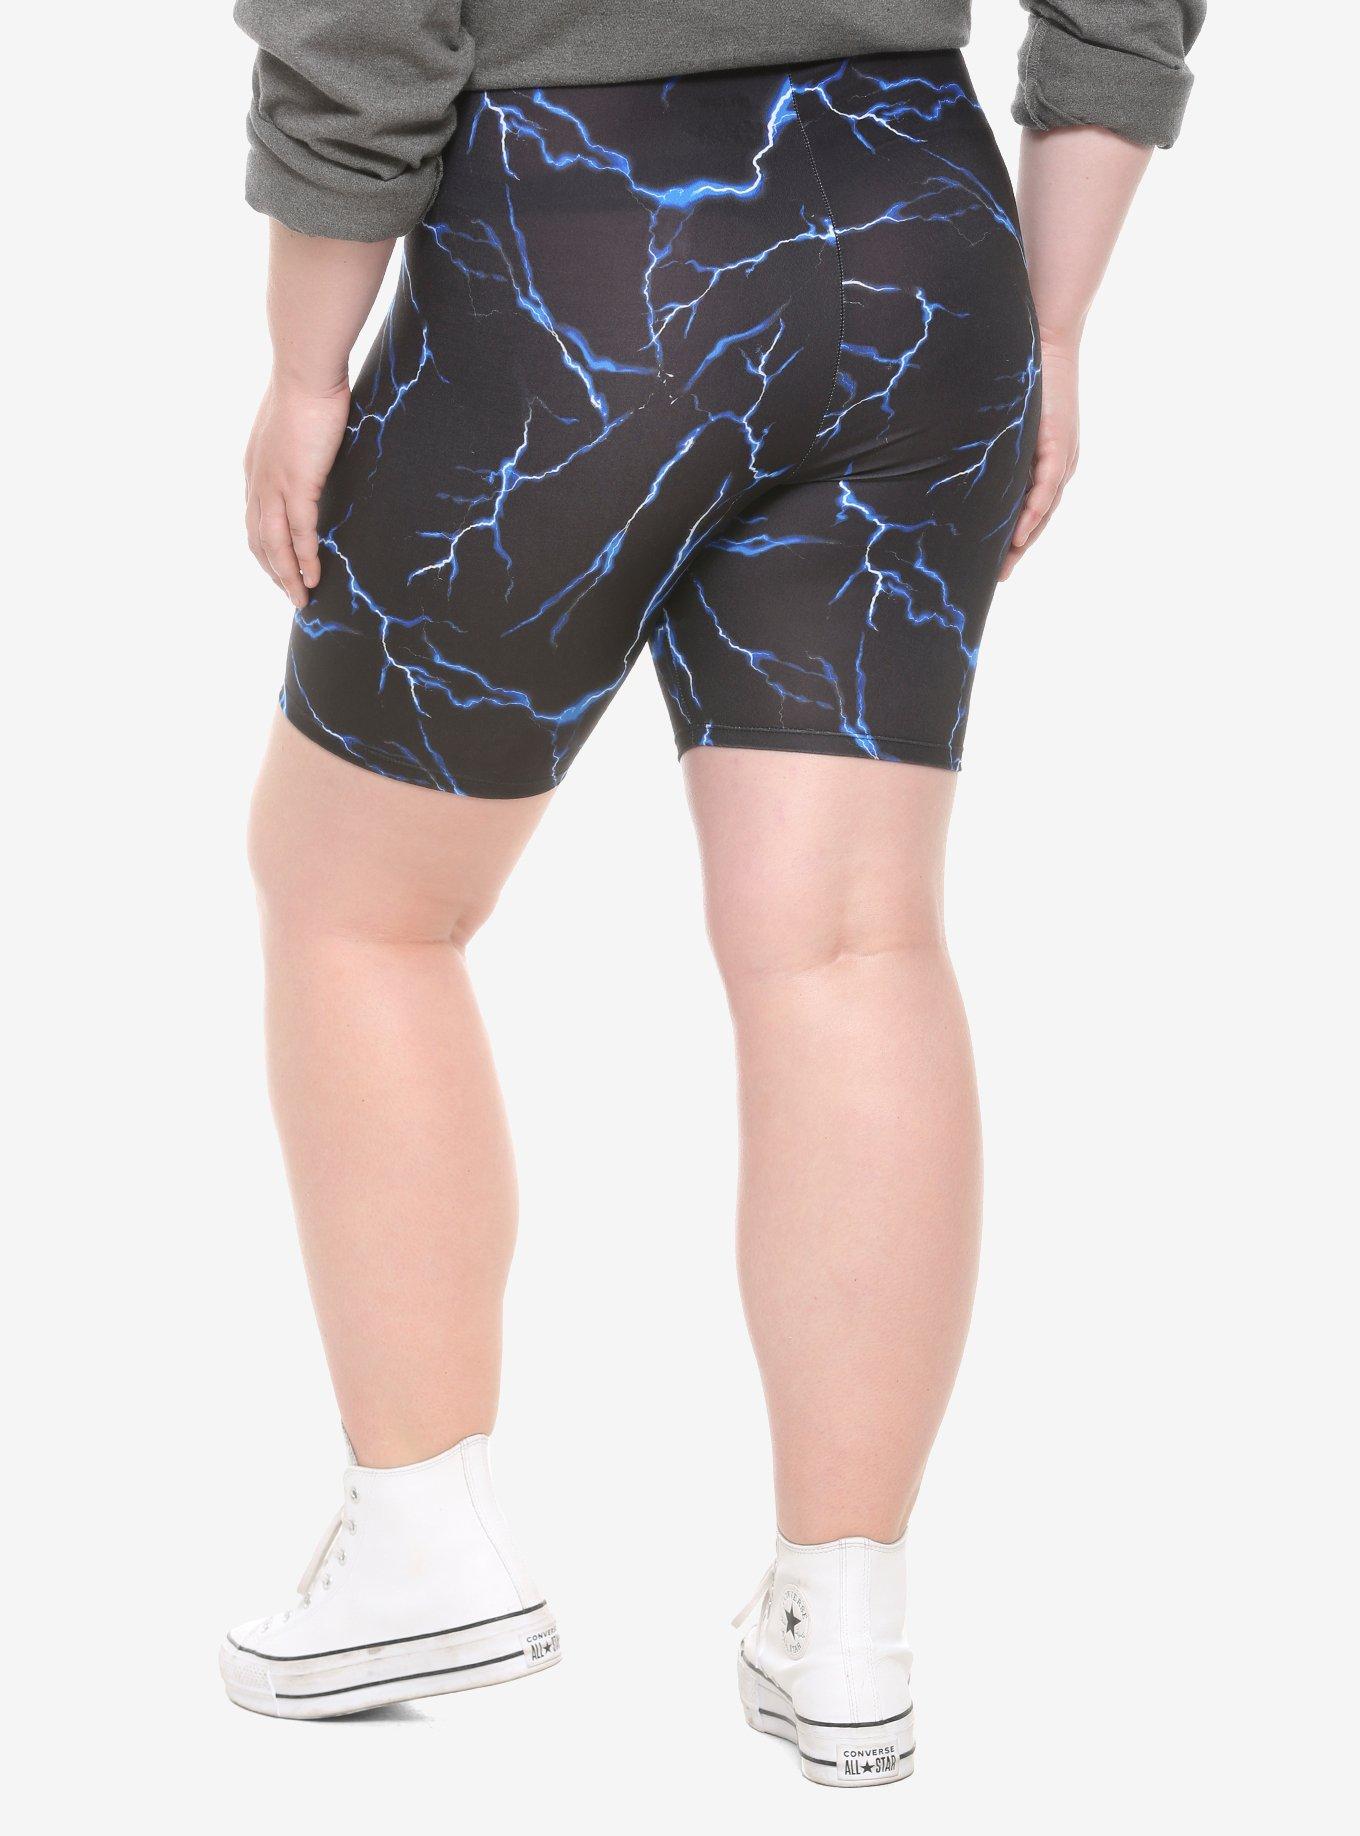 Blue Lightning Girls Bike Shorts Plus Size, BLACK, alternate